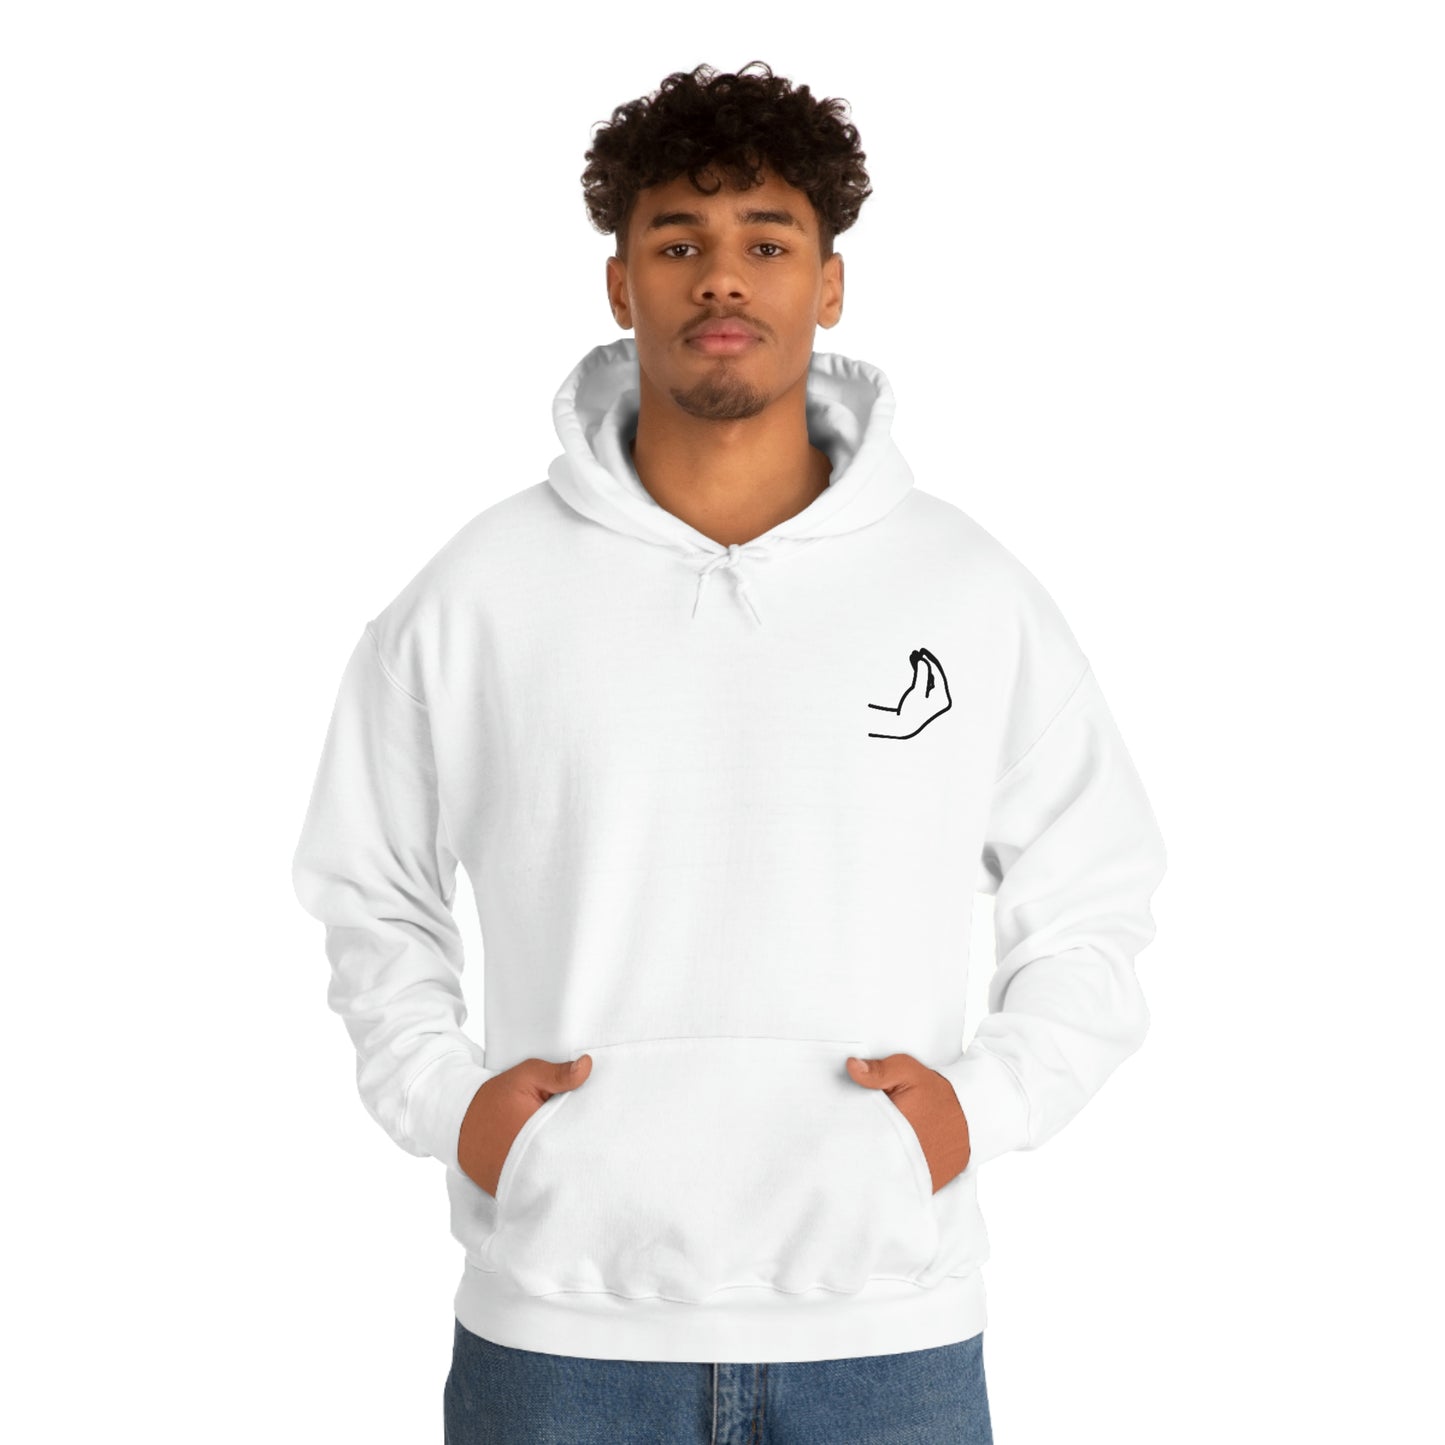 Italians Do It Better - Plain Logo - Unisex Heavy Blend™ Hooded Sweatshirt